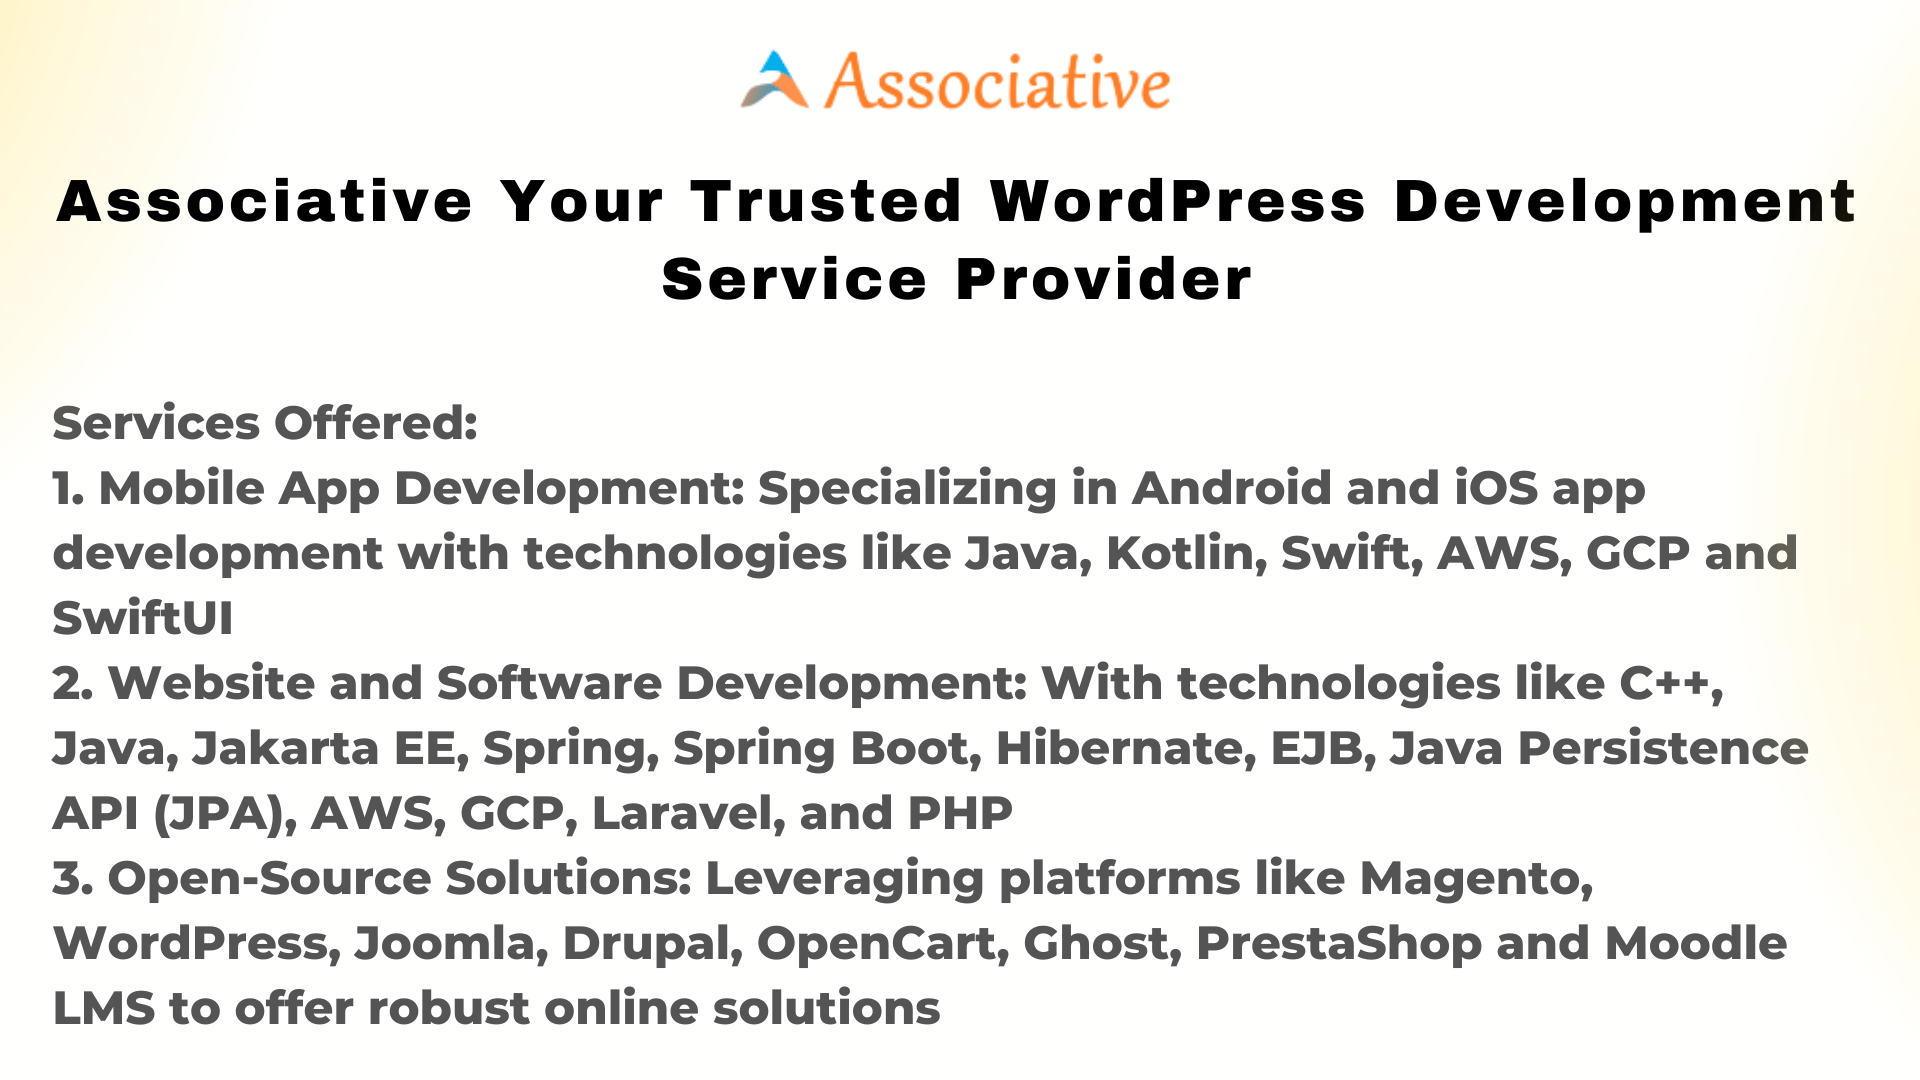 Associative Your Trusted WordPress Development Service Provider